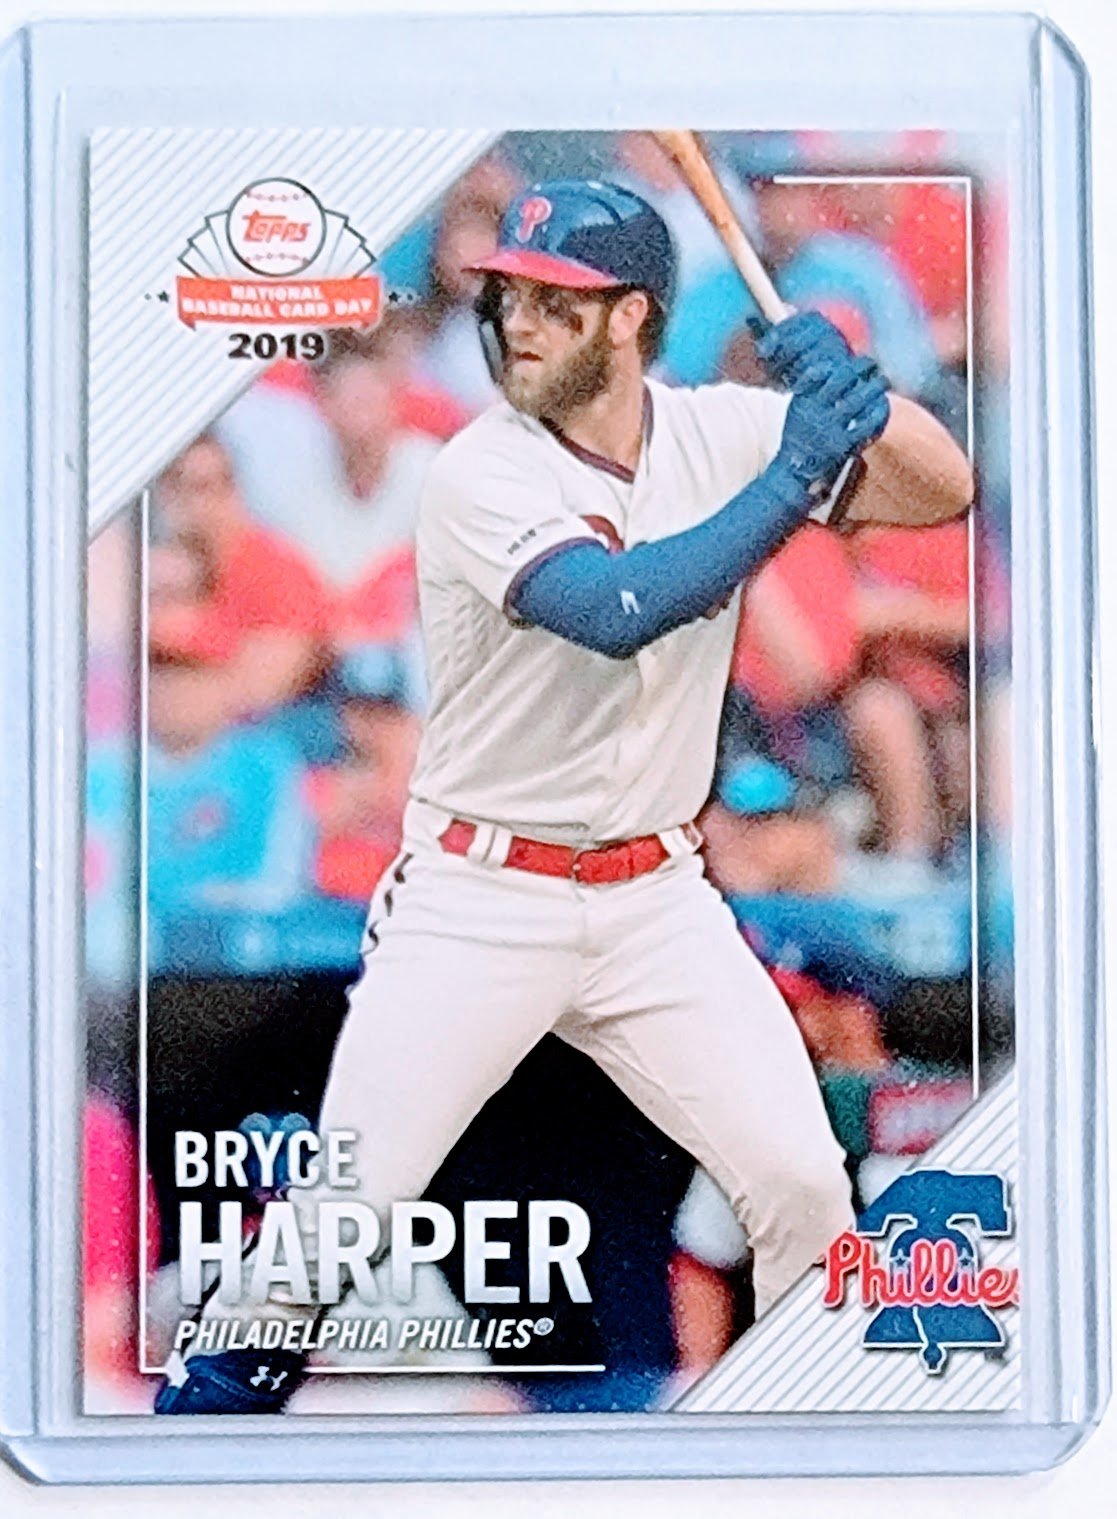 Bryce Harper 2019 Topps Now Phillies Baseball Card